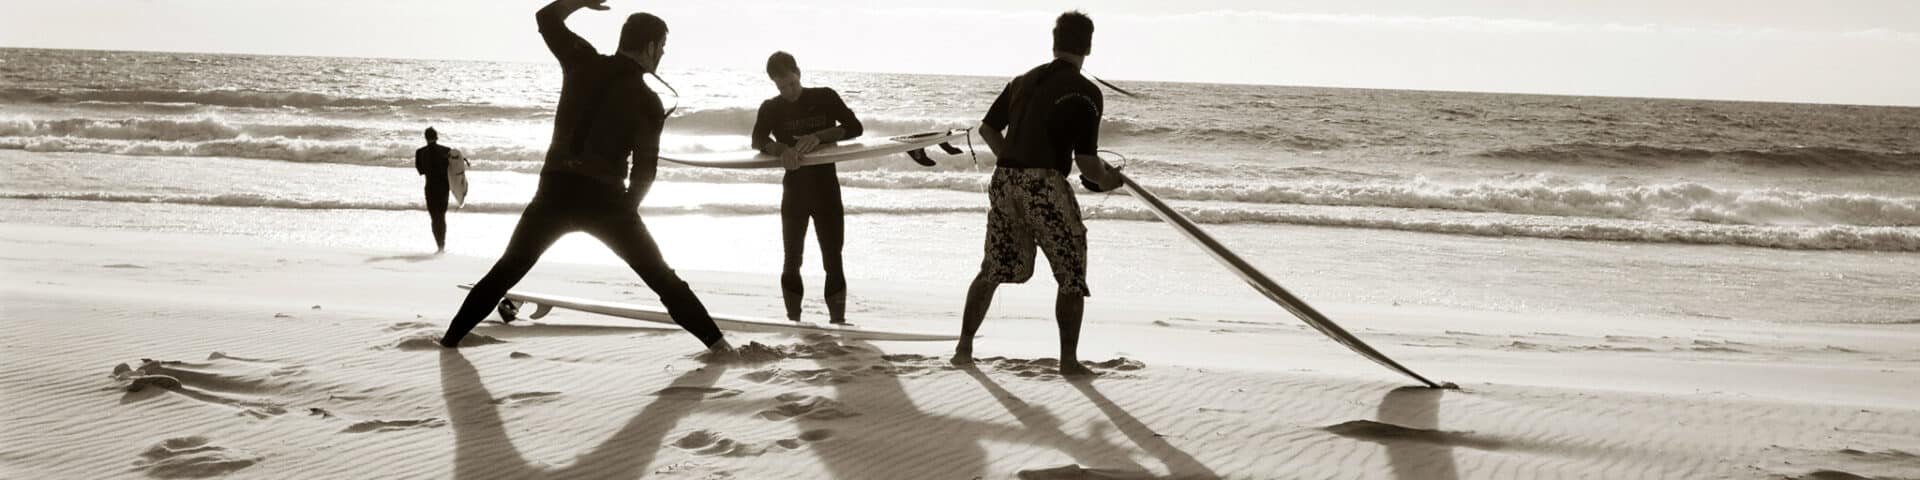 guys on beach w boards